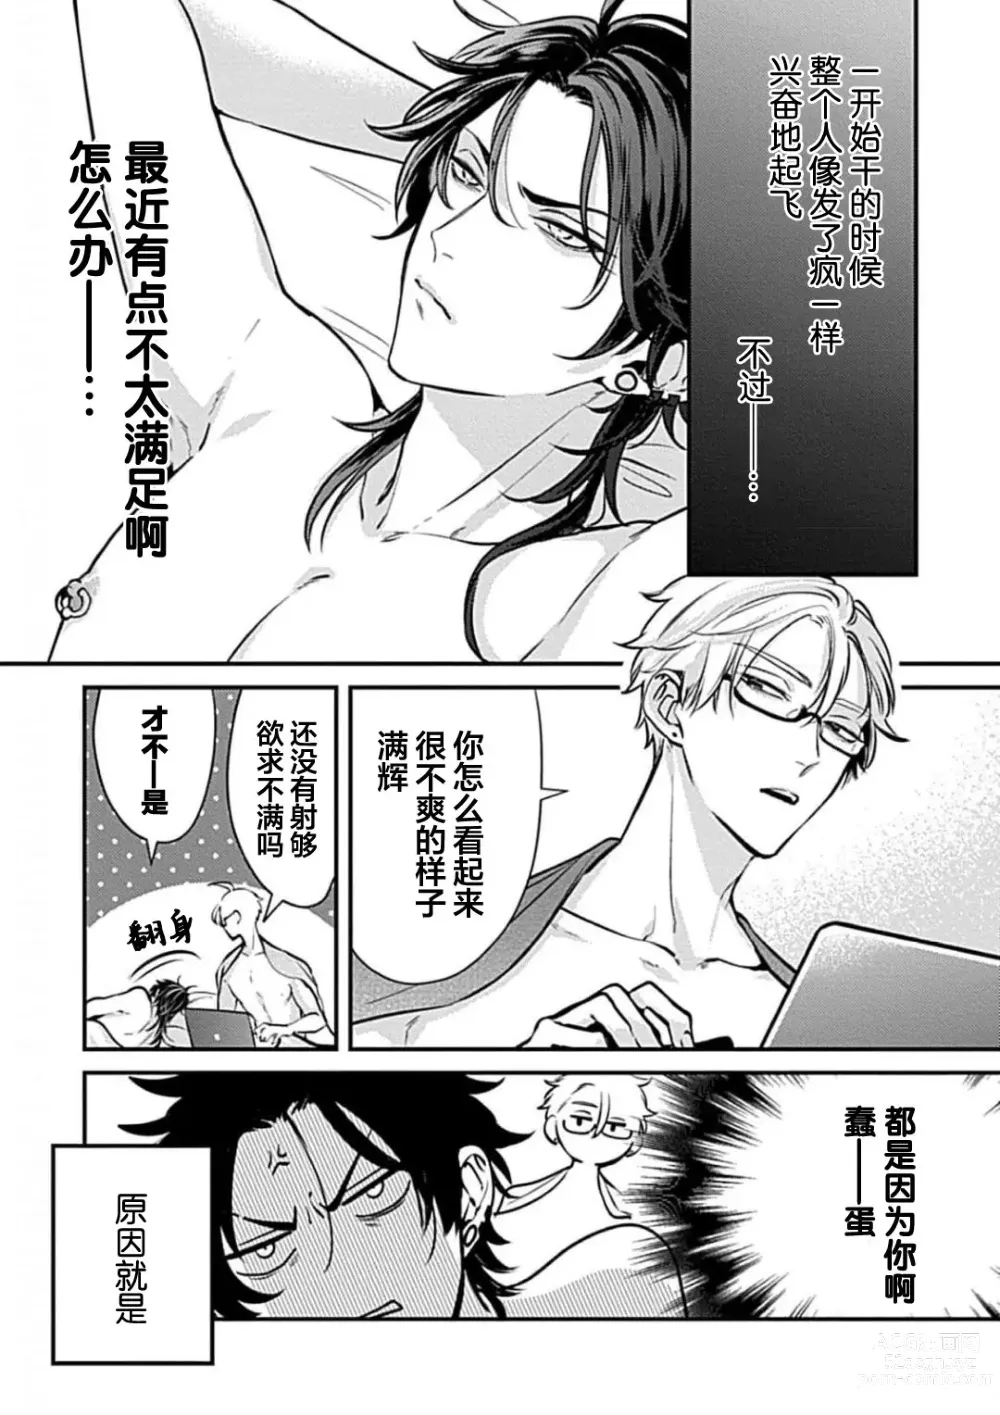 Page 7 of manga SSS Channel ｜SSS频道